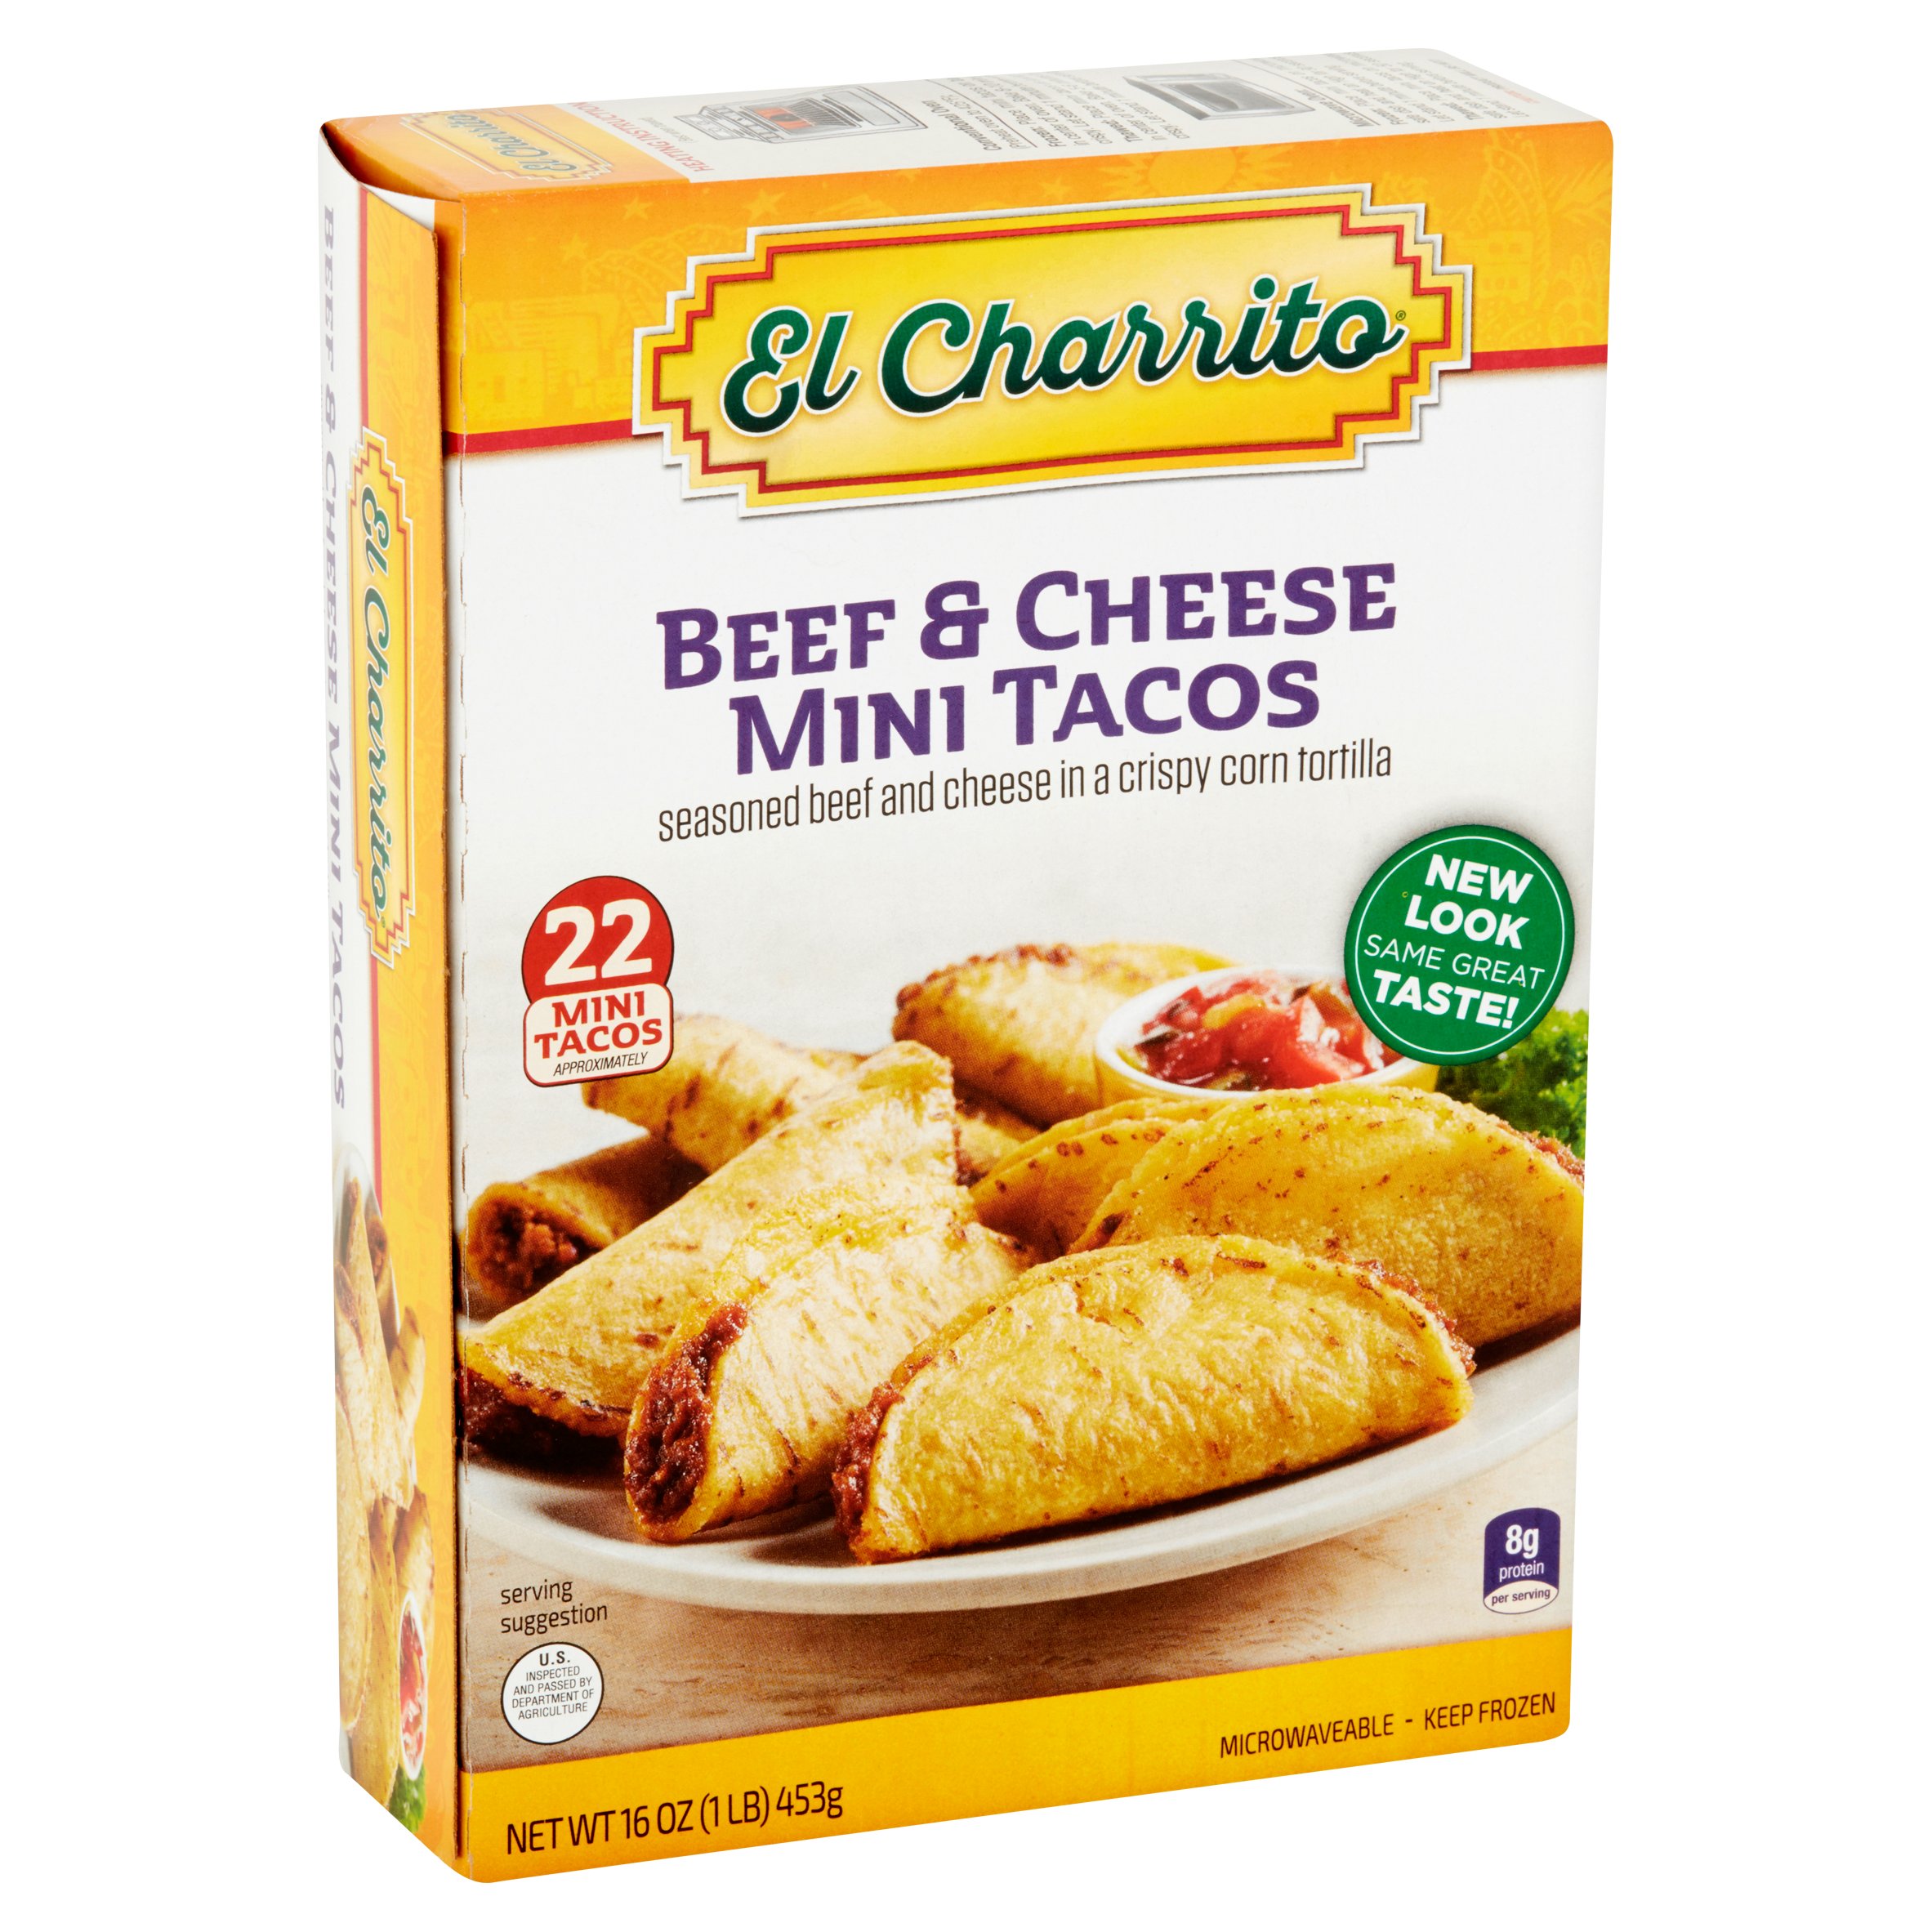 El Charrito Ec Beef & Cheese Mini Taco - image 4 of 4